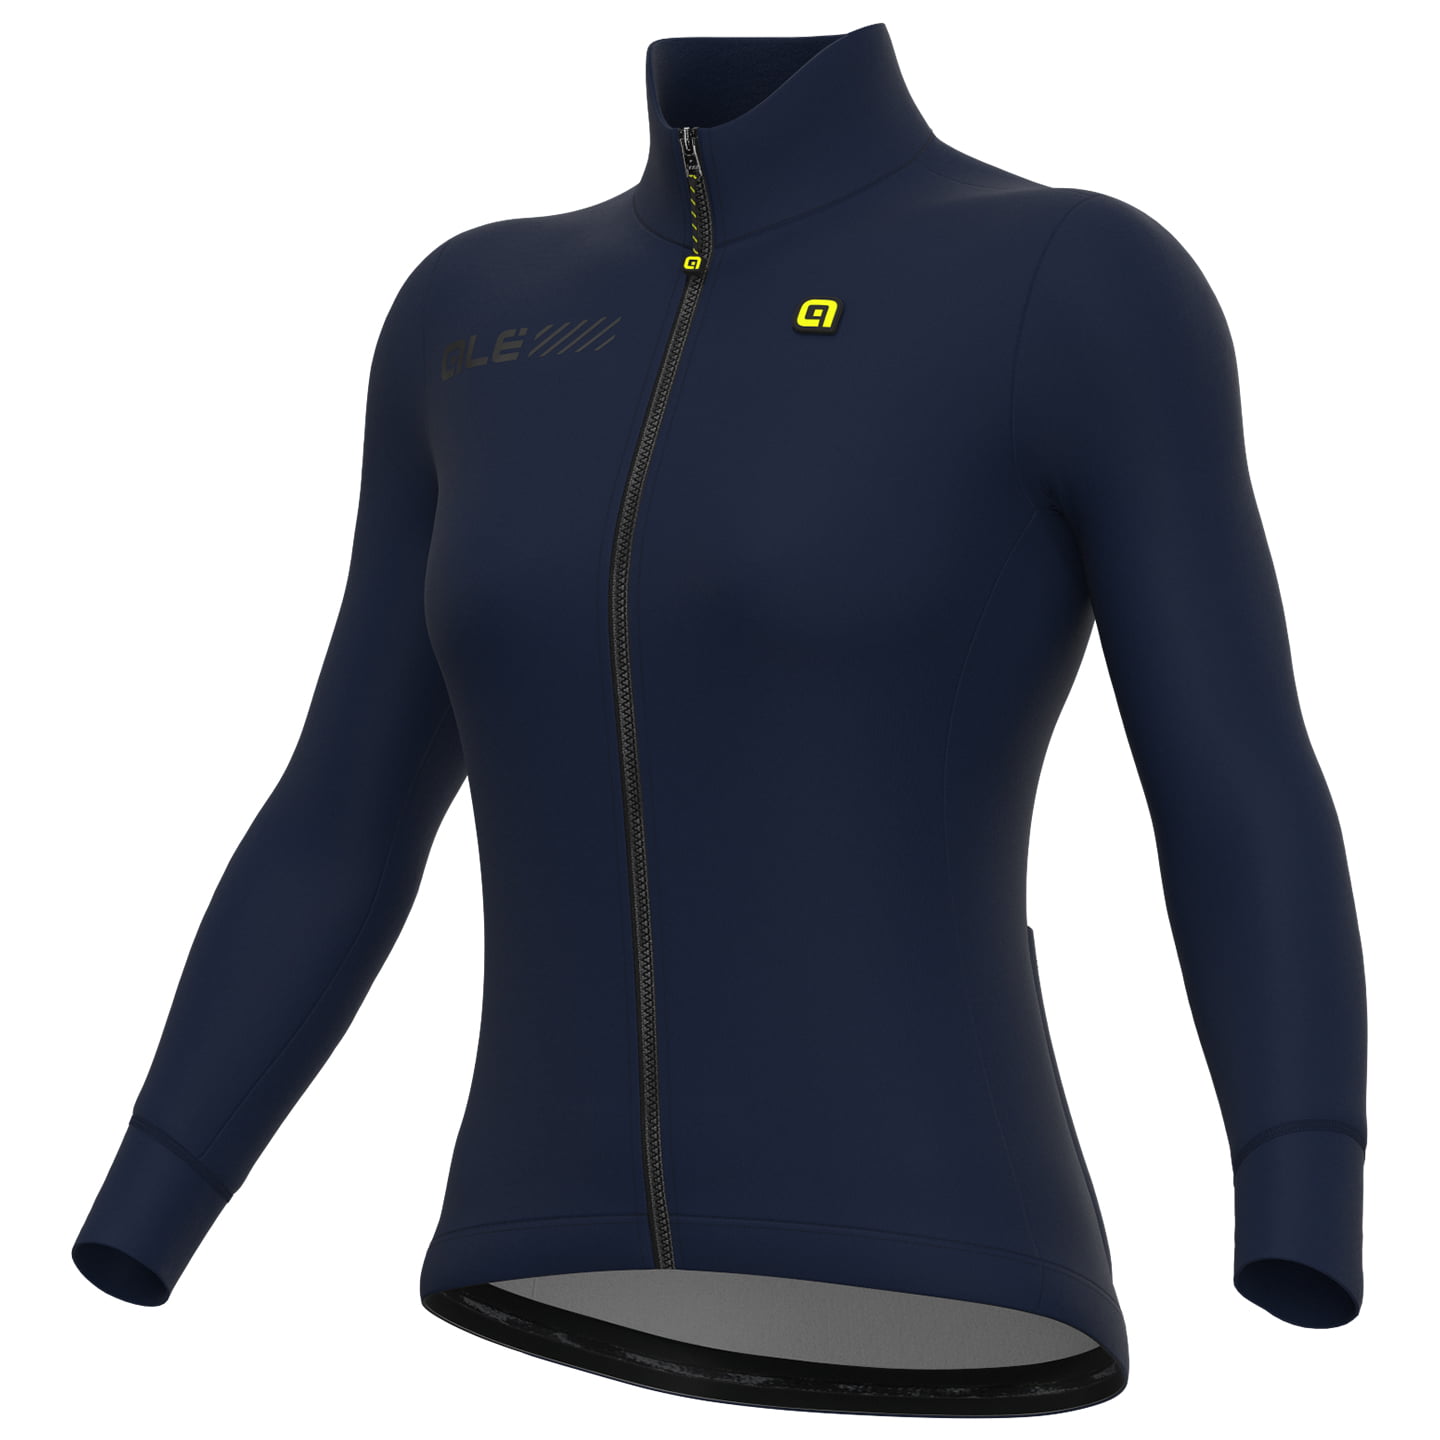 ALE Women’s Winter Jacket Fondo Women’s Thermal Jacket, size M, Cycle jacket, Cycling clothing